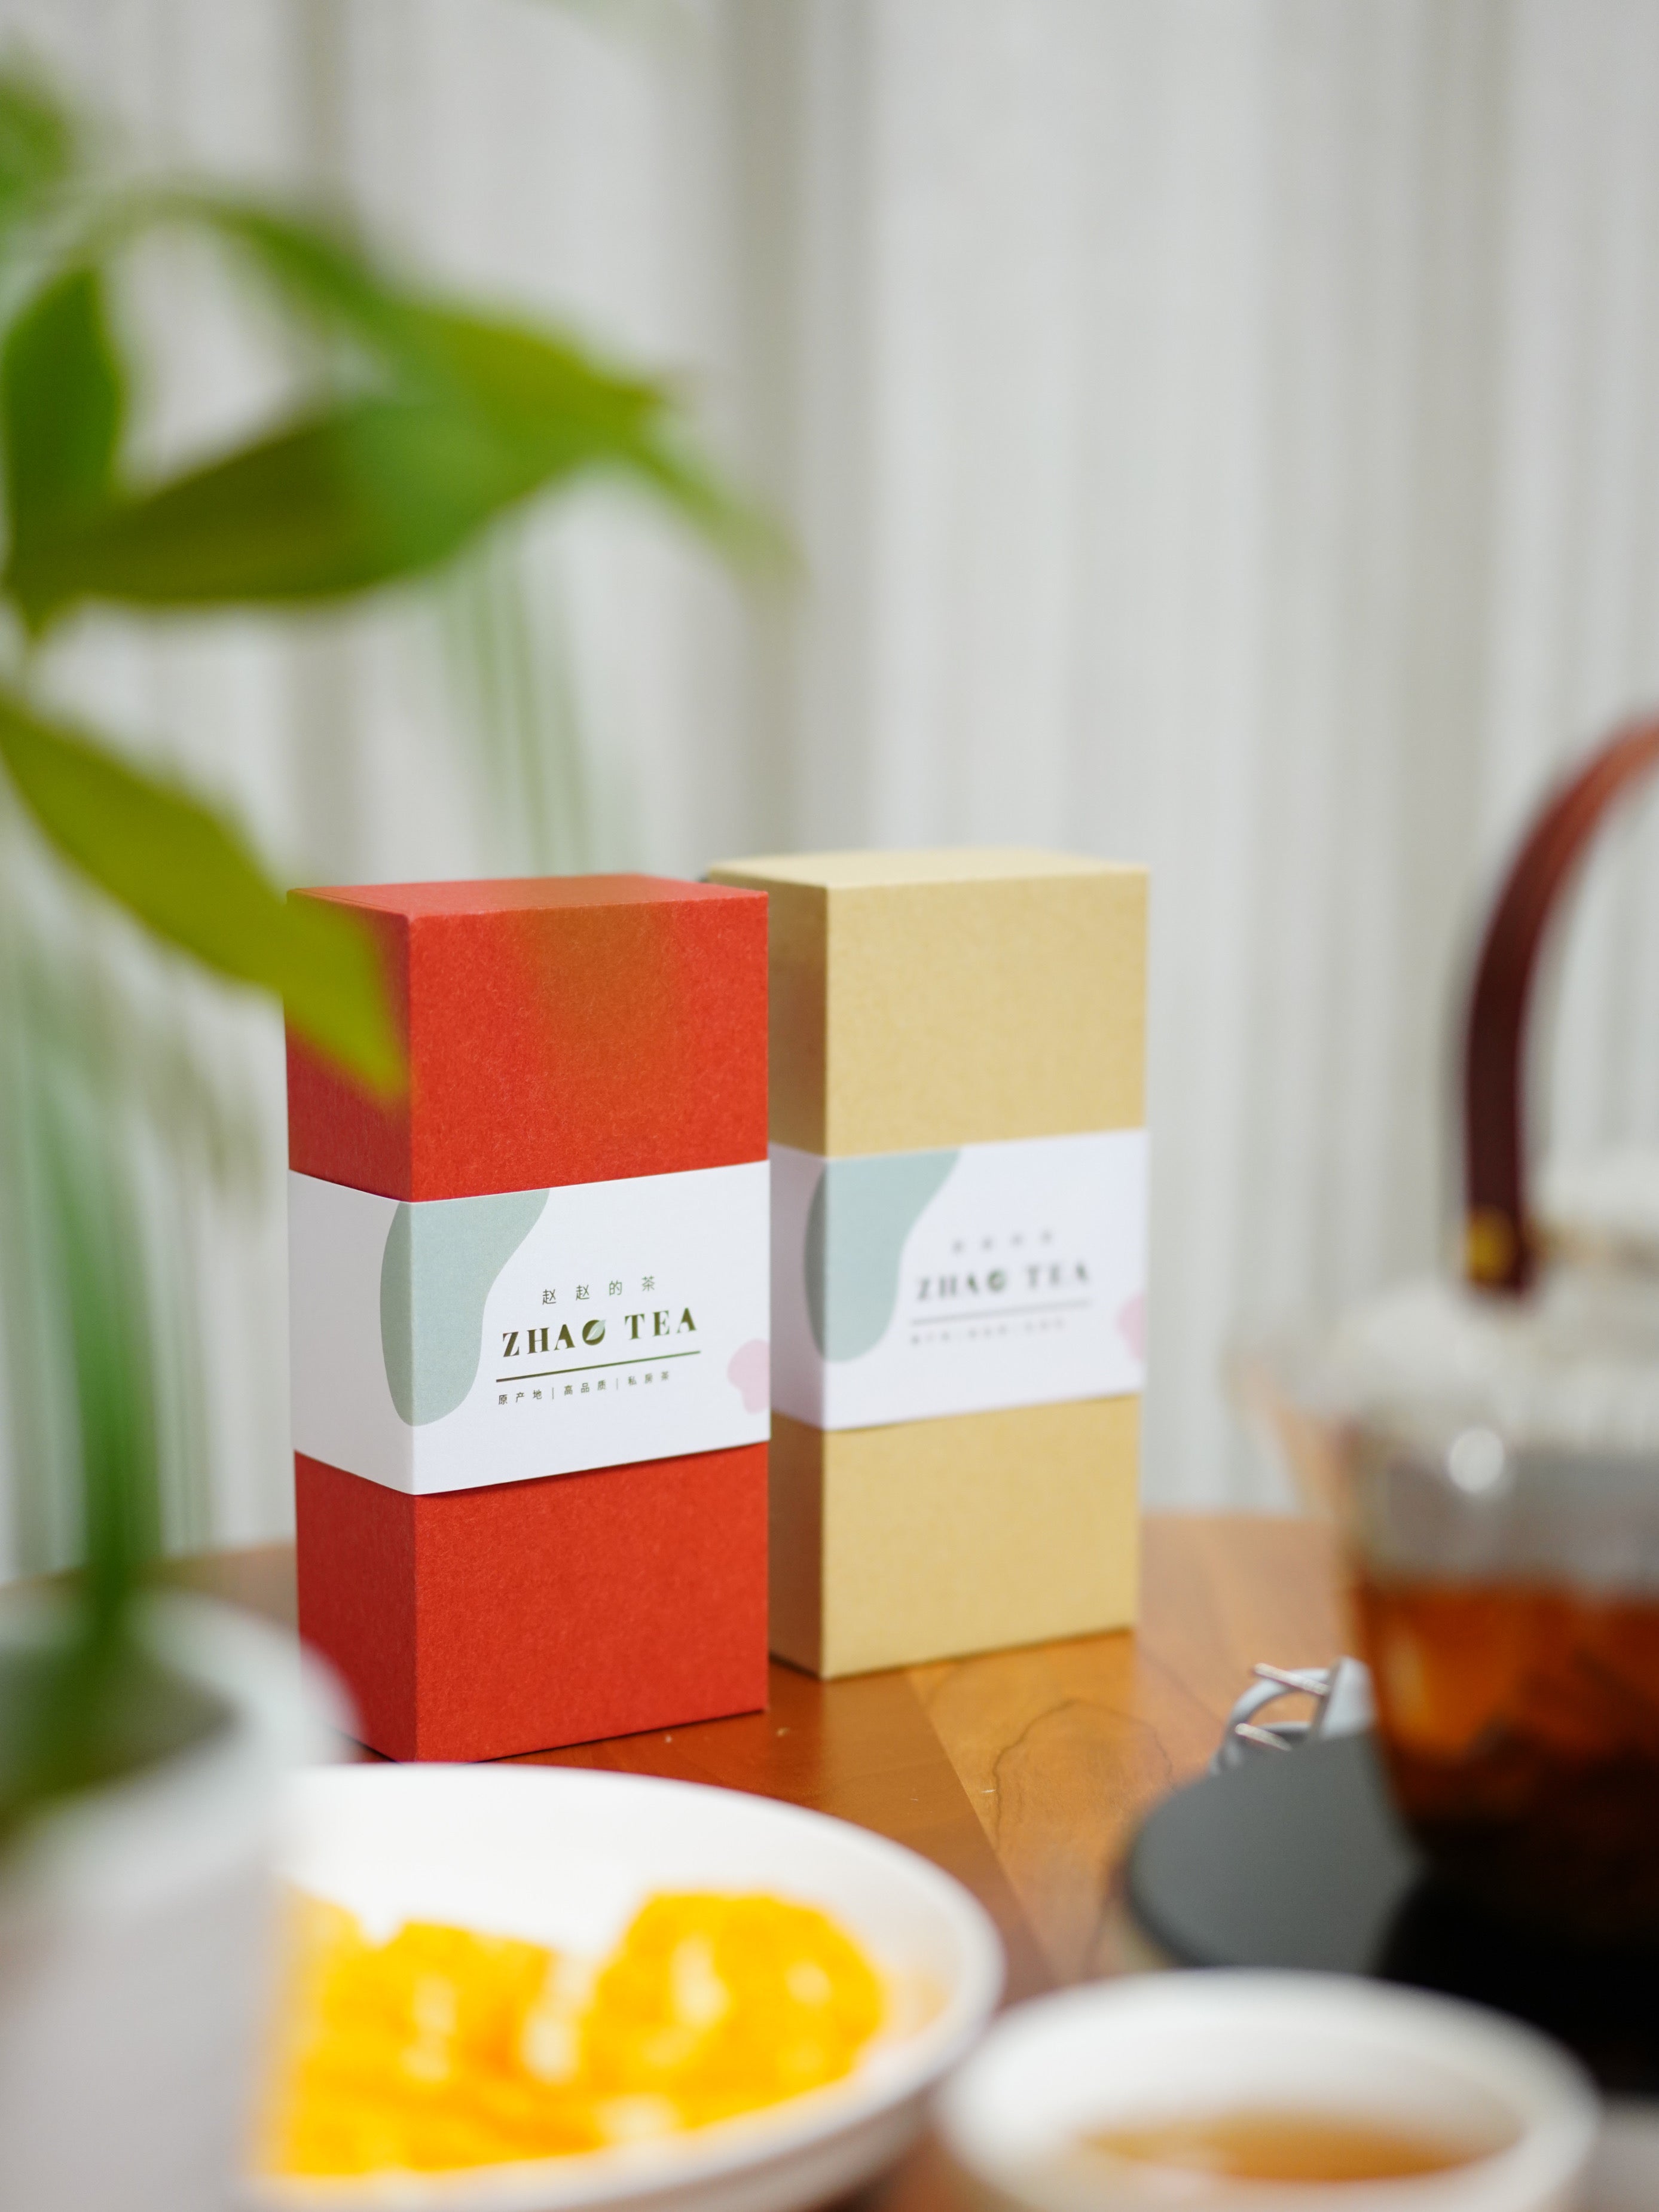 9 Tea Tasting Kit · Explore the World of Tea (A Box of 9 Exquisite Tea Varieties) 经典9茶·品鉴装